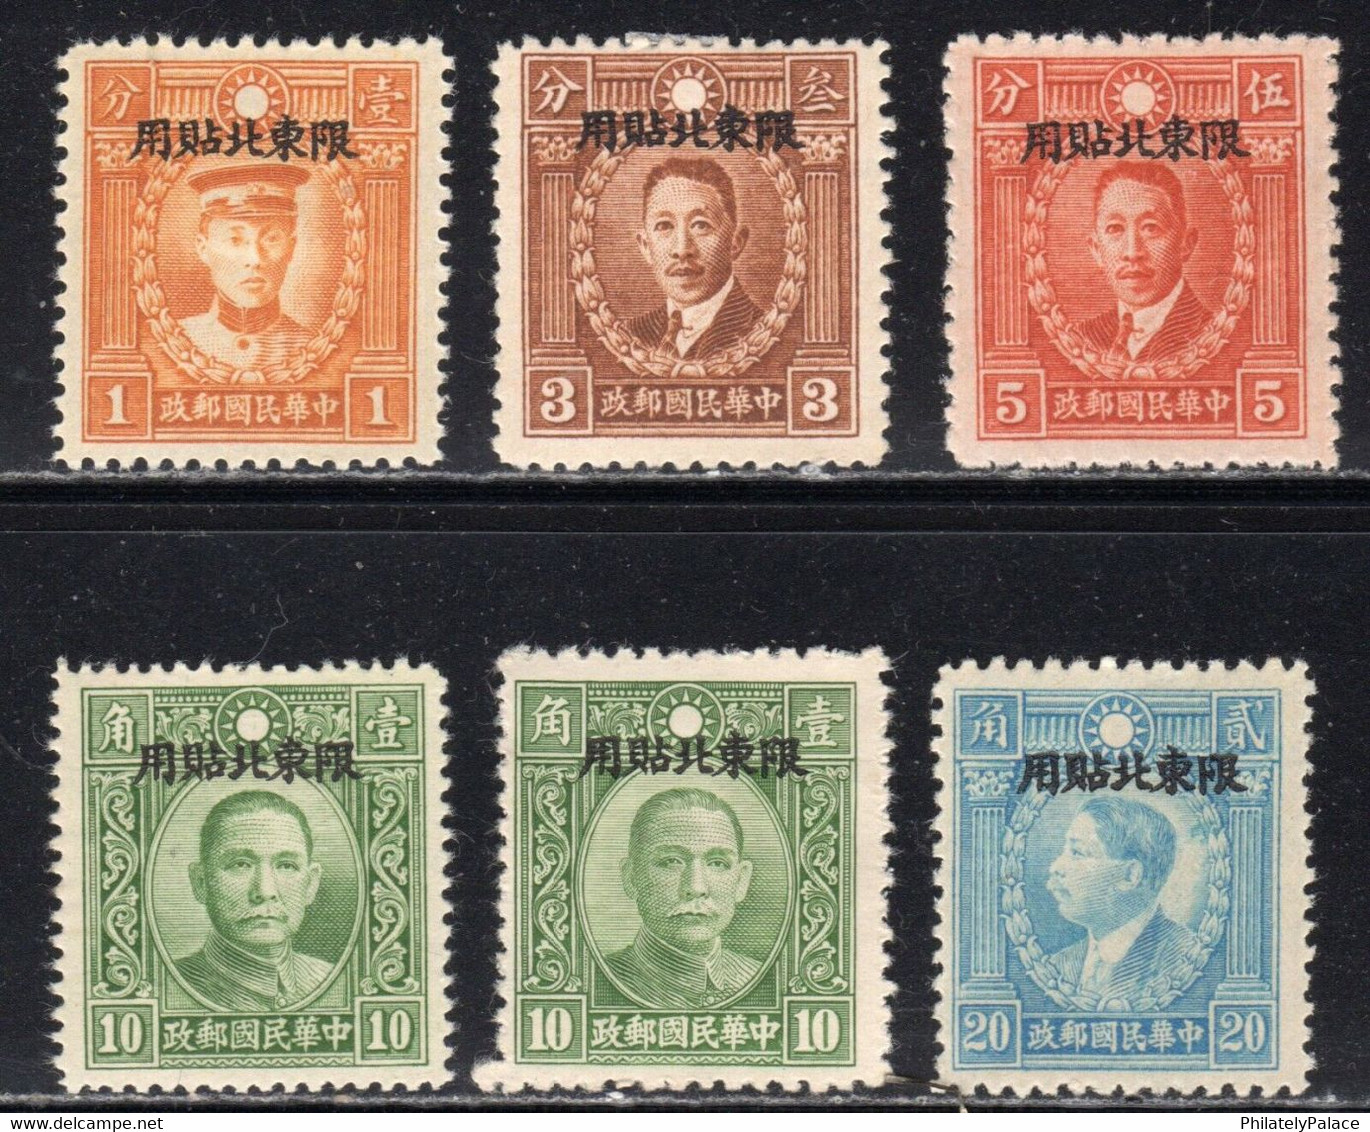 China NE Provinces 1946 Optd "Limited For Use In NE" Full Set Of 6 MNH (**) VERY RARE SET - 1943-45 Shanghái & Nankín